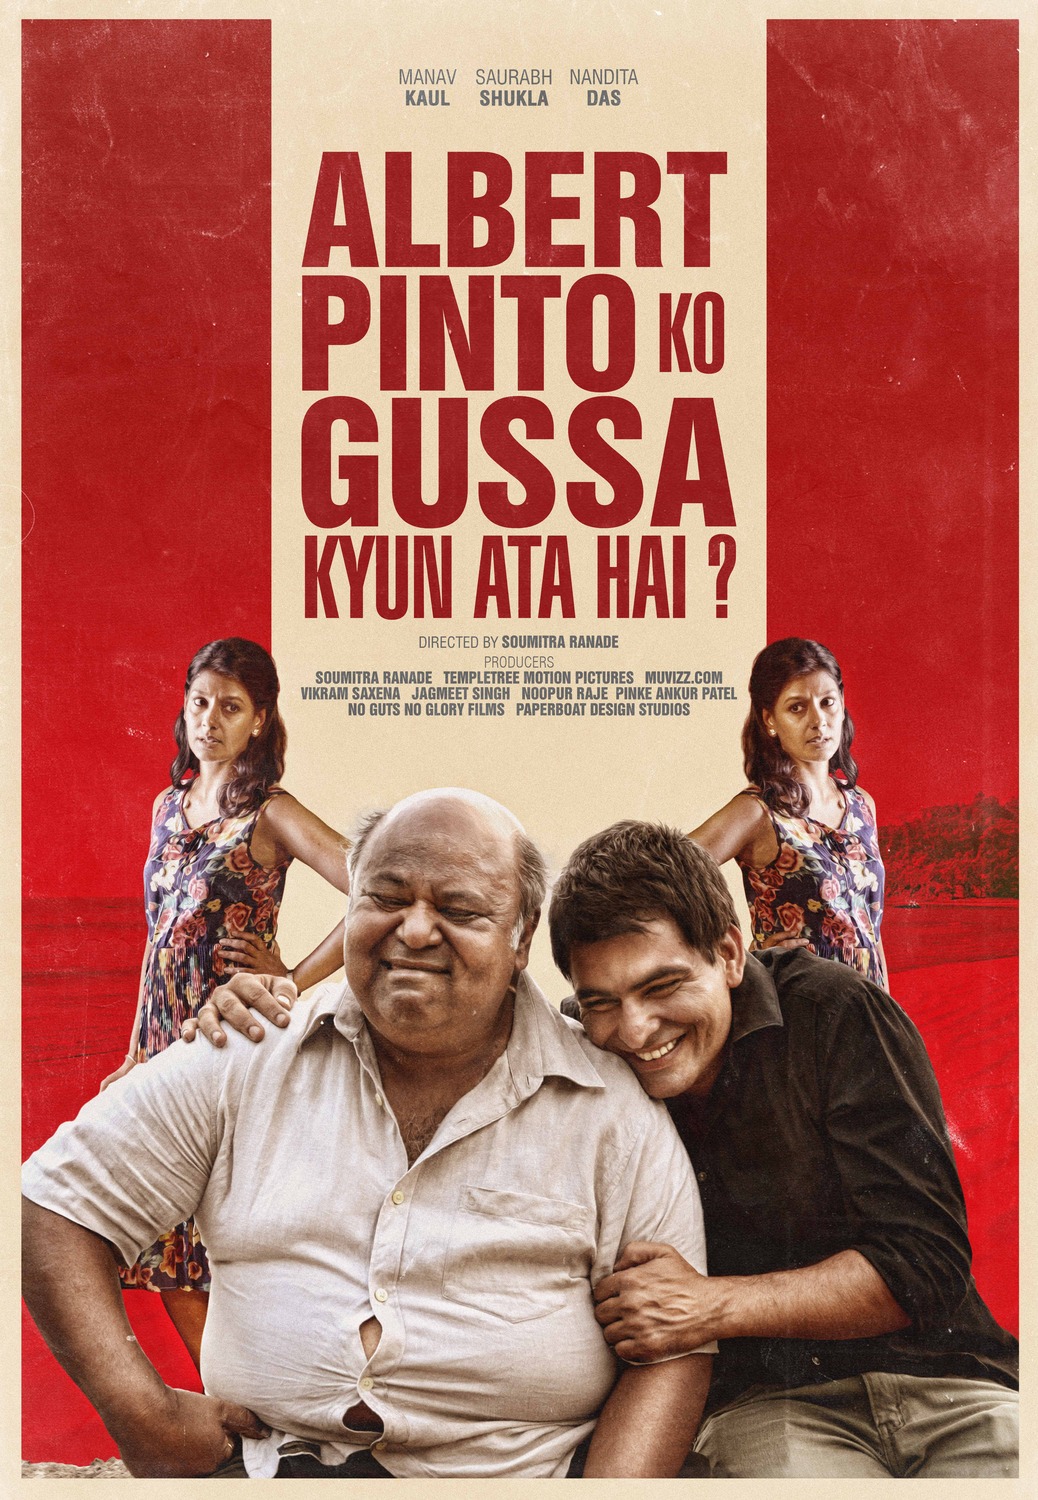 Extra Large Movie Poster Image for Albert Pinto Ko Gussa Kyun Aata Hai? (#2 of 2)